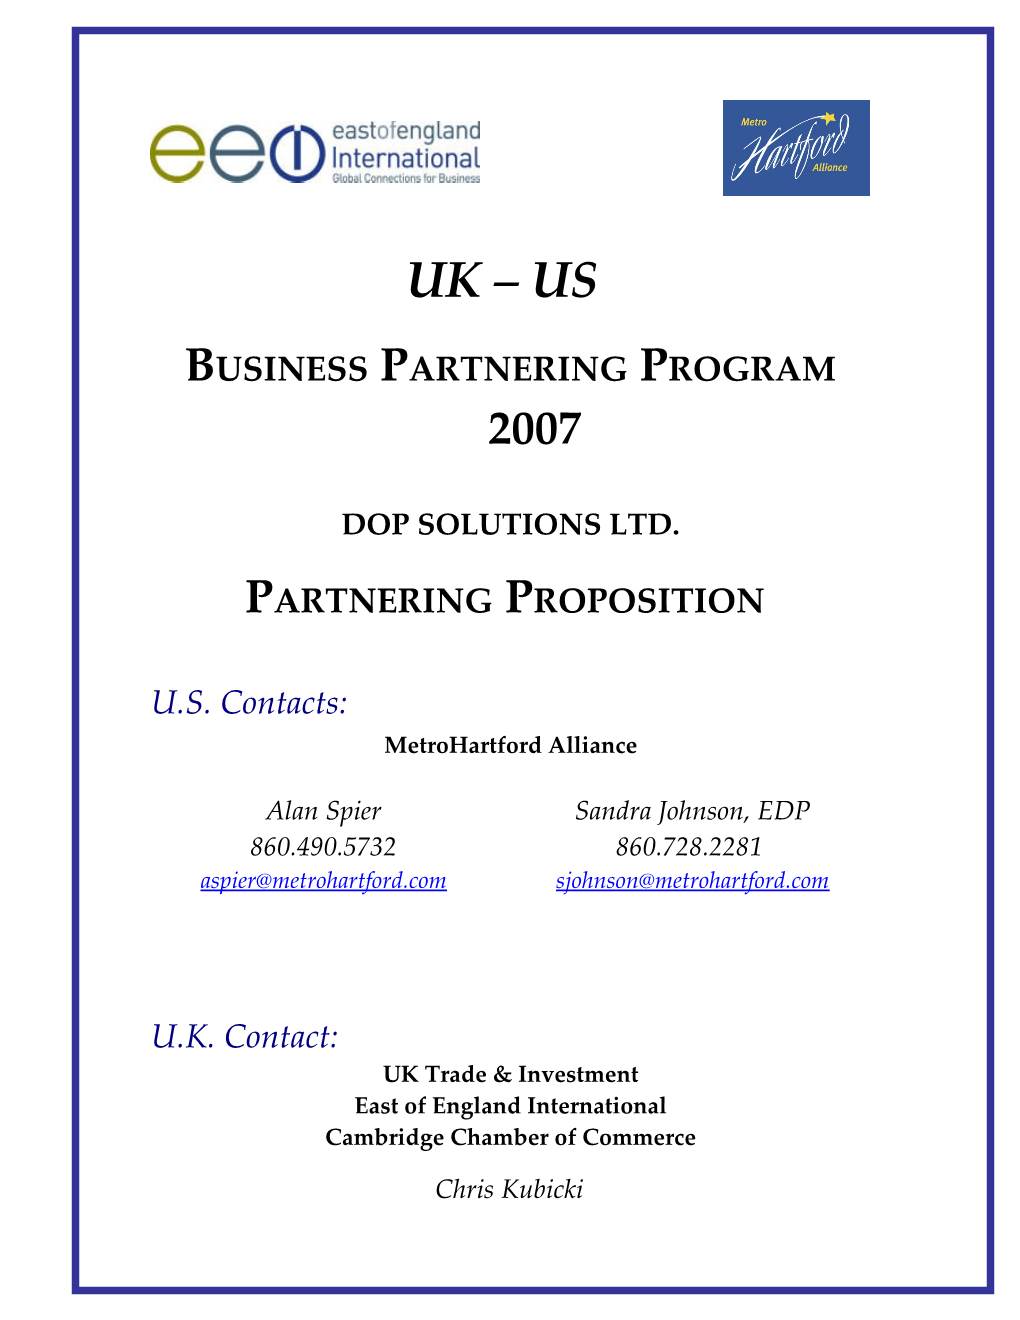 Business Partnering Program 2007